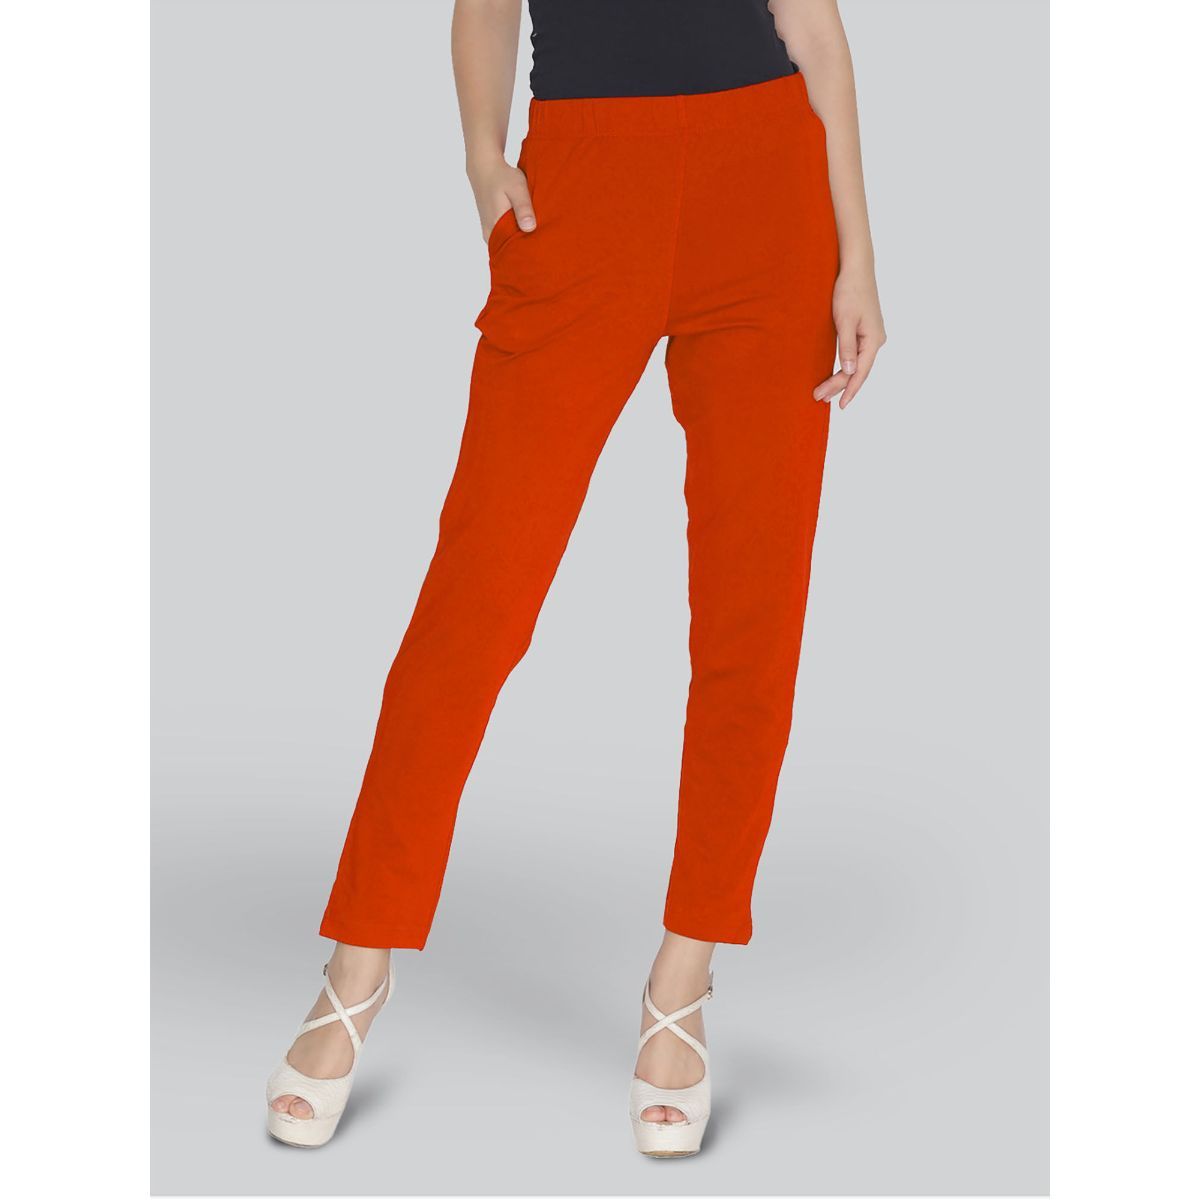 Lyra Pants  Buy Lyra Solid Coloured Free Size Kurti Pant for WomenOrange  Online  Nykaa Fashion